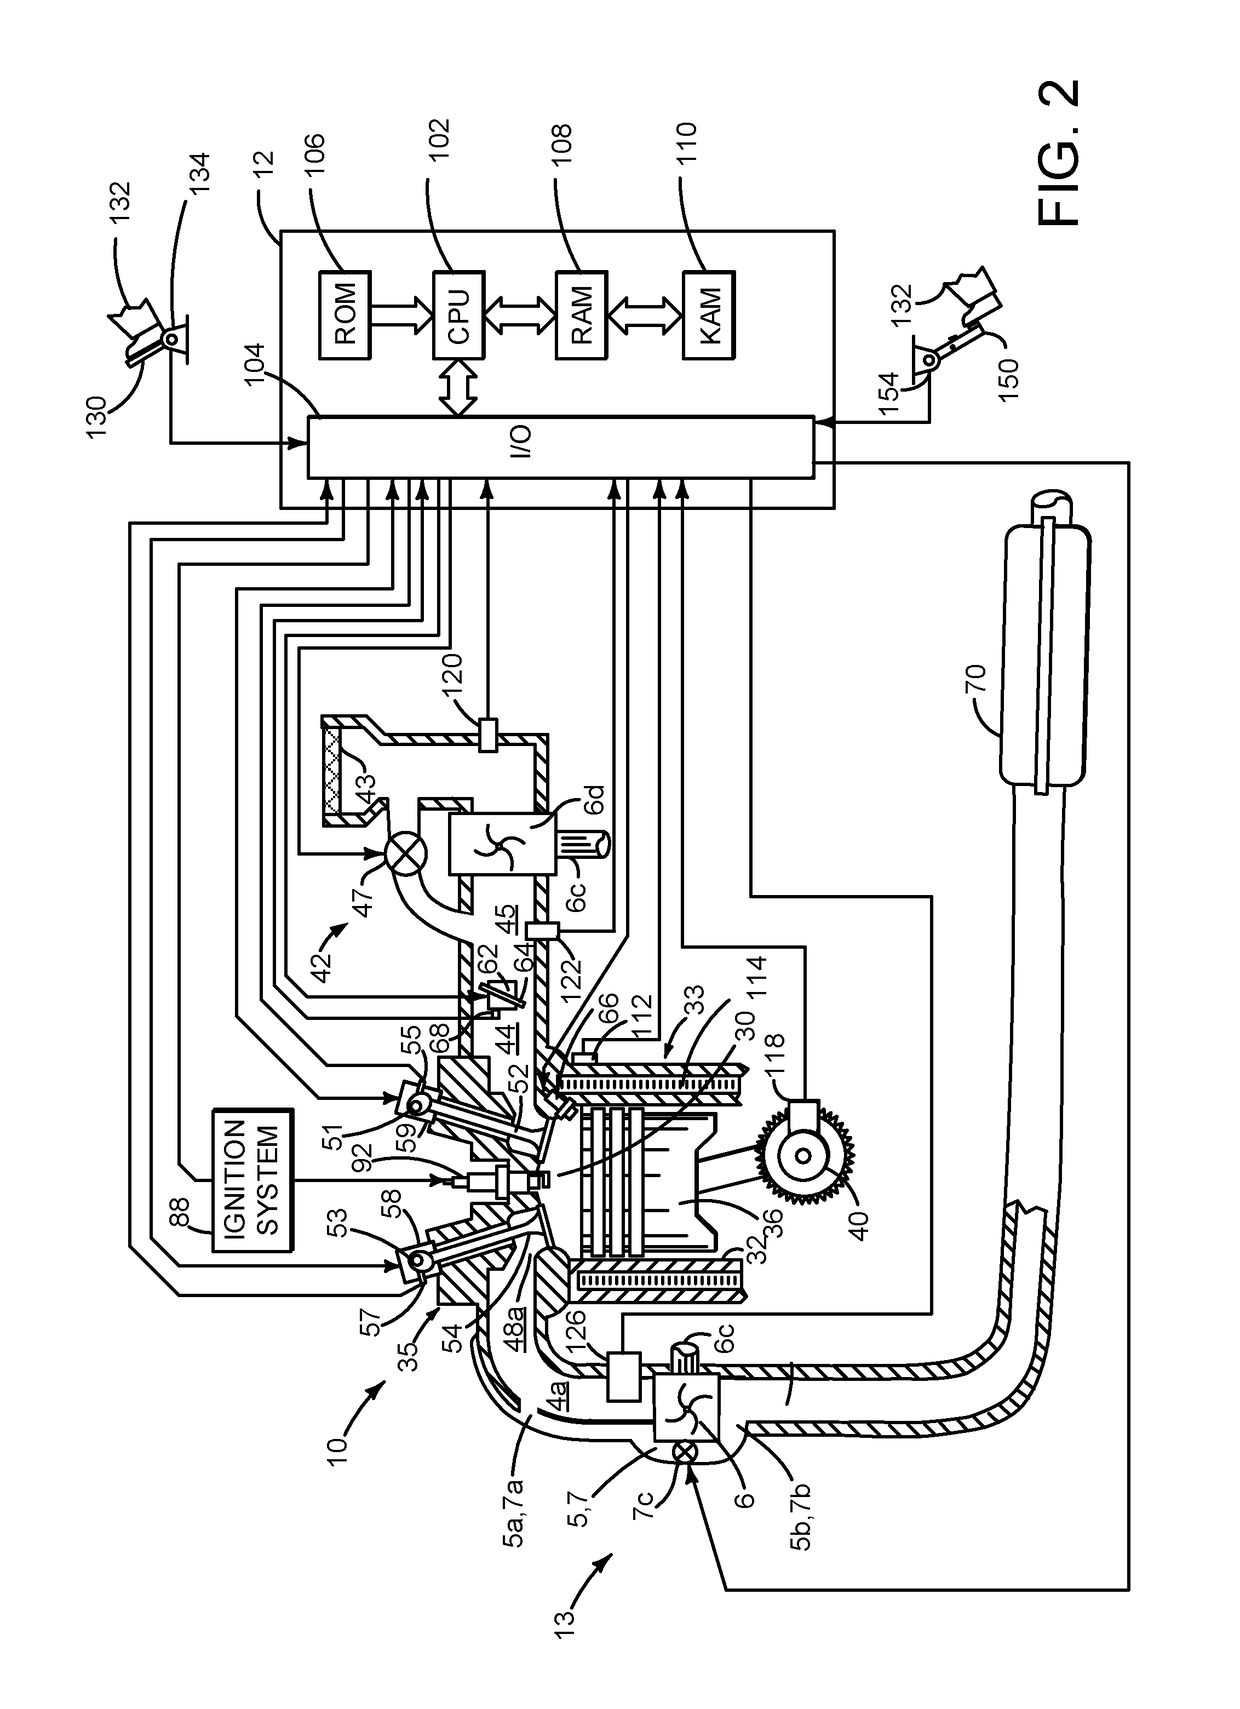 Internal combustion engine with exhaust-gas turbocharging arrangement